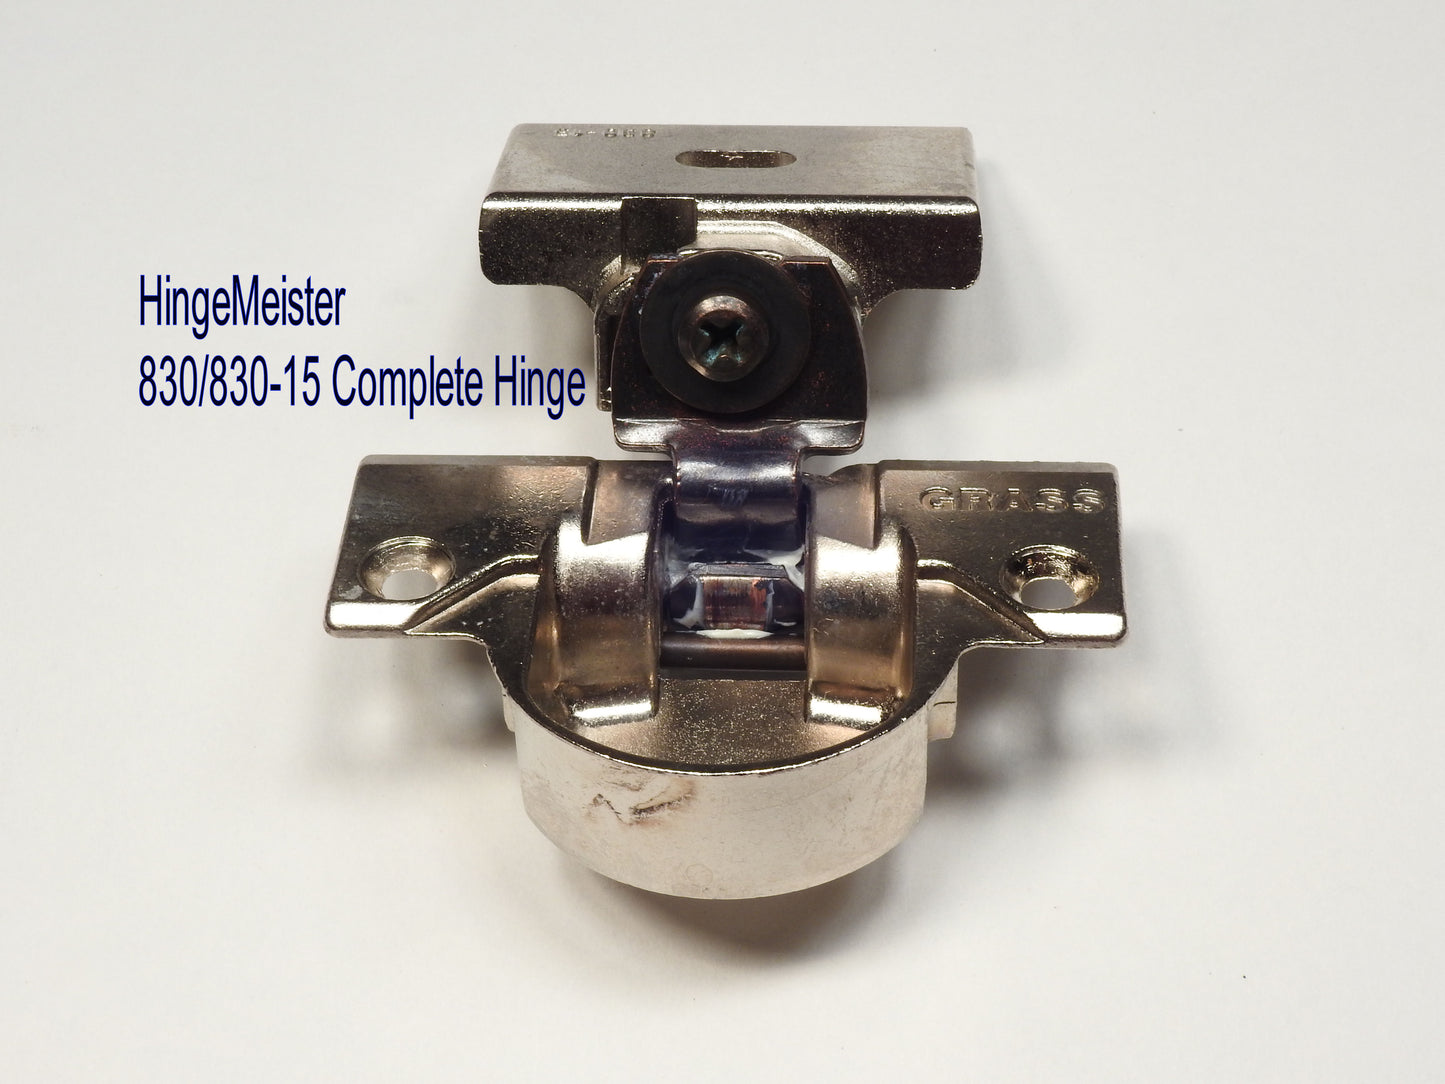 Grass 830-15 Nickel Hinge and mounting plate - Complete Hinge - Refurbished